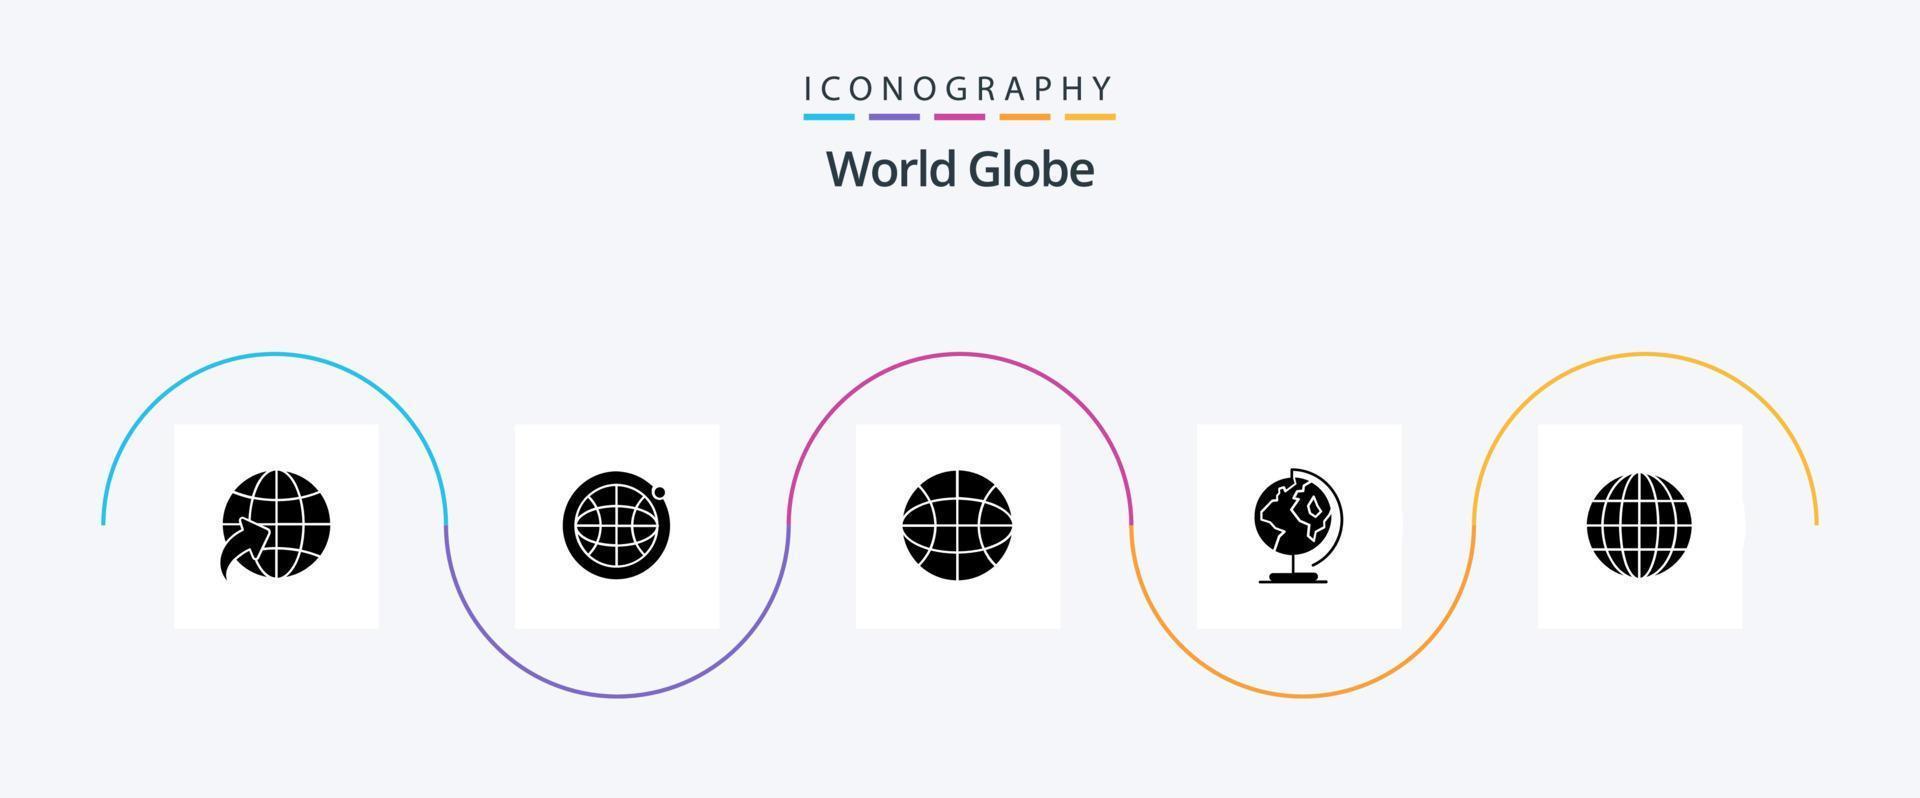 globo glifo 5 ícone pacote Incluindo . mundialmente. rede vetor